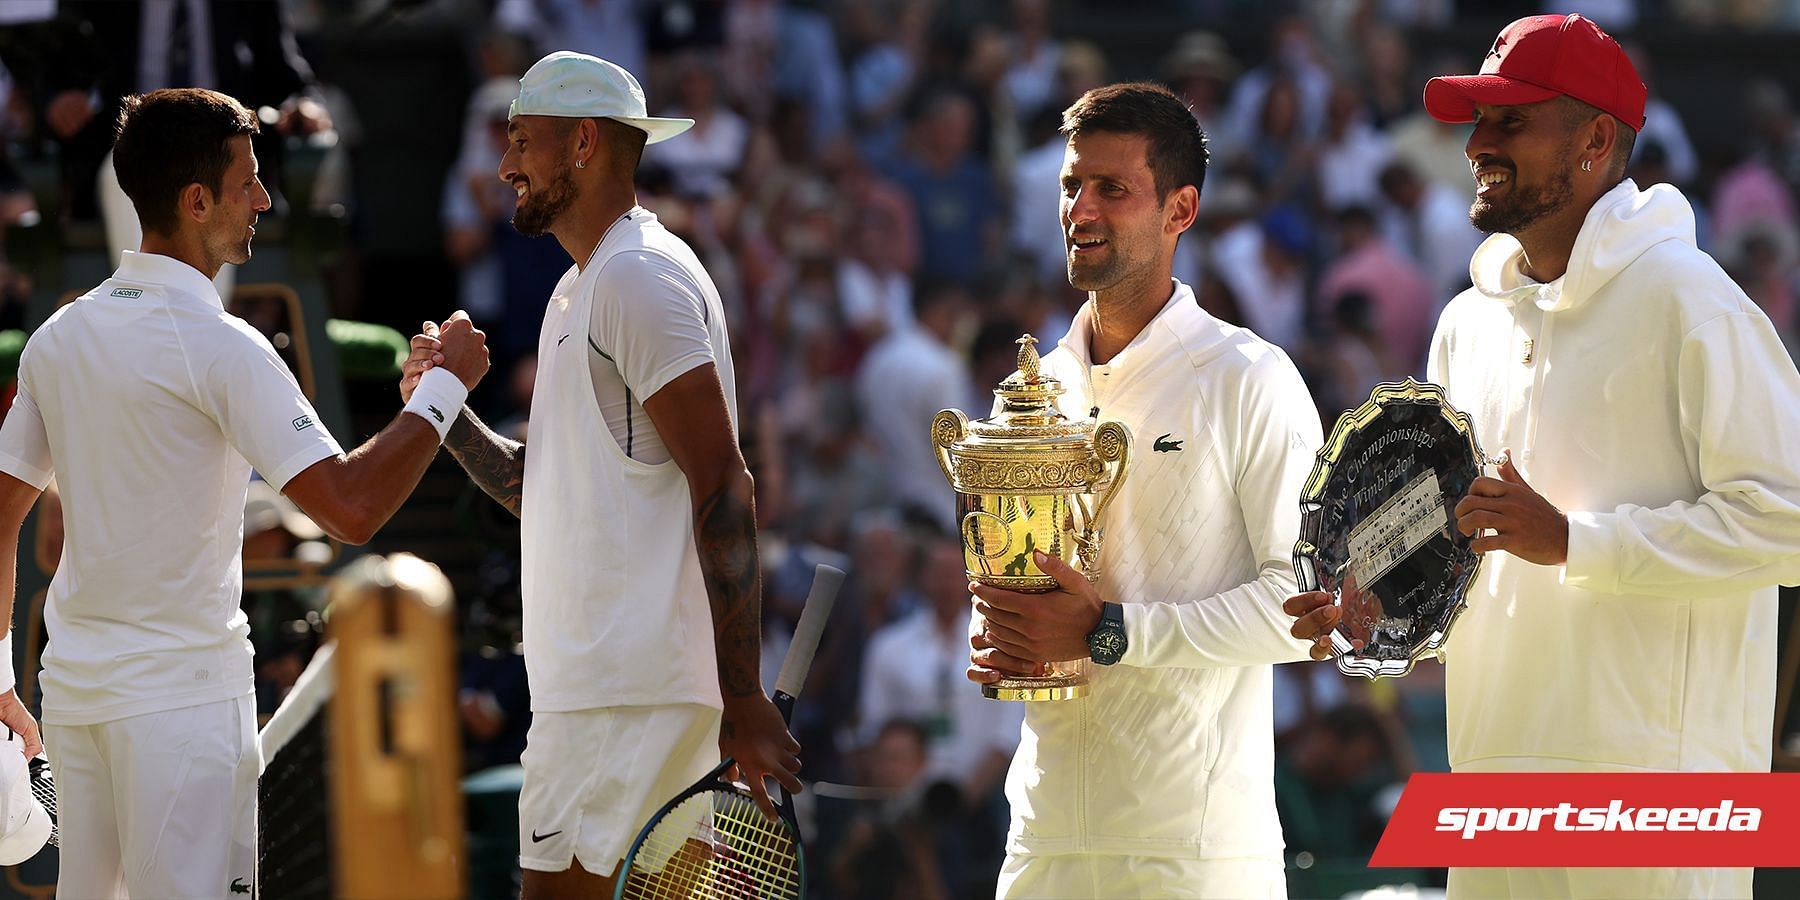 Novak Djokovic beat Nick Kyrgios to win his seventh Wimbledon title